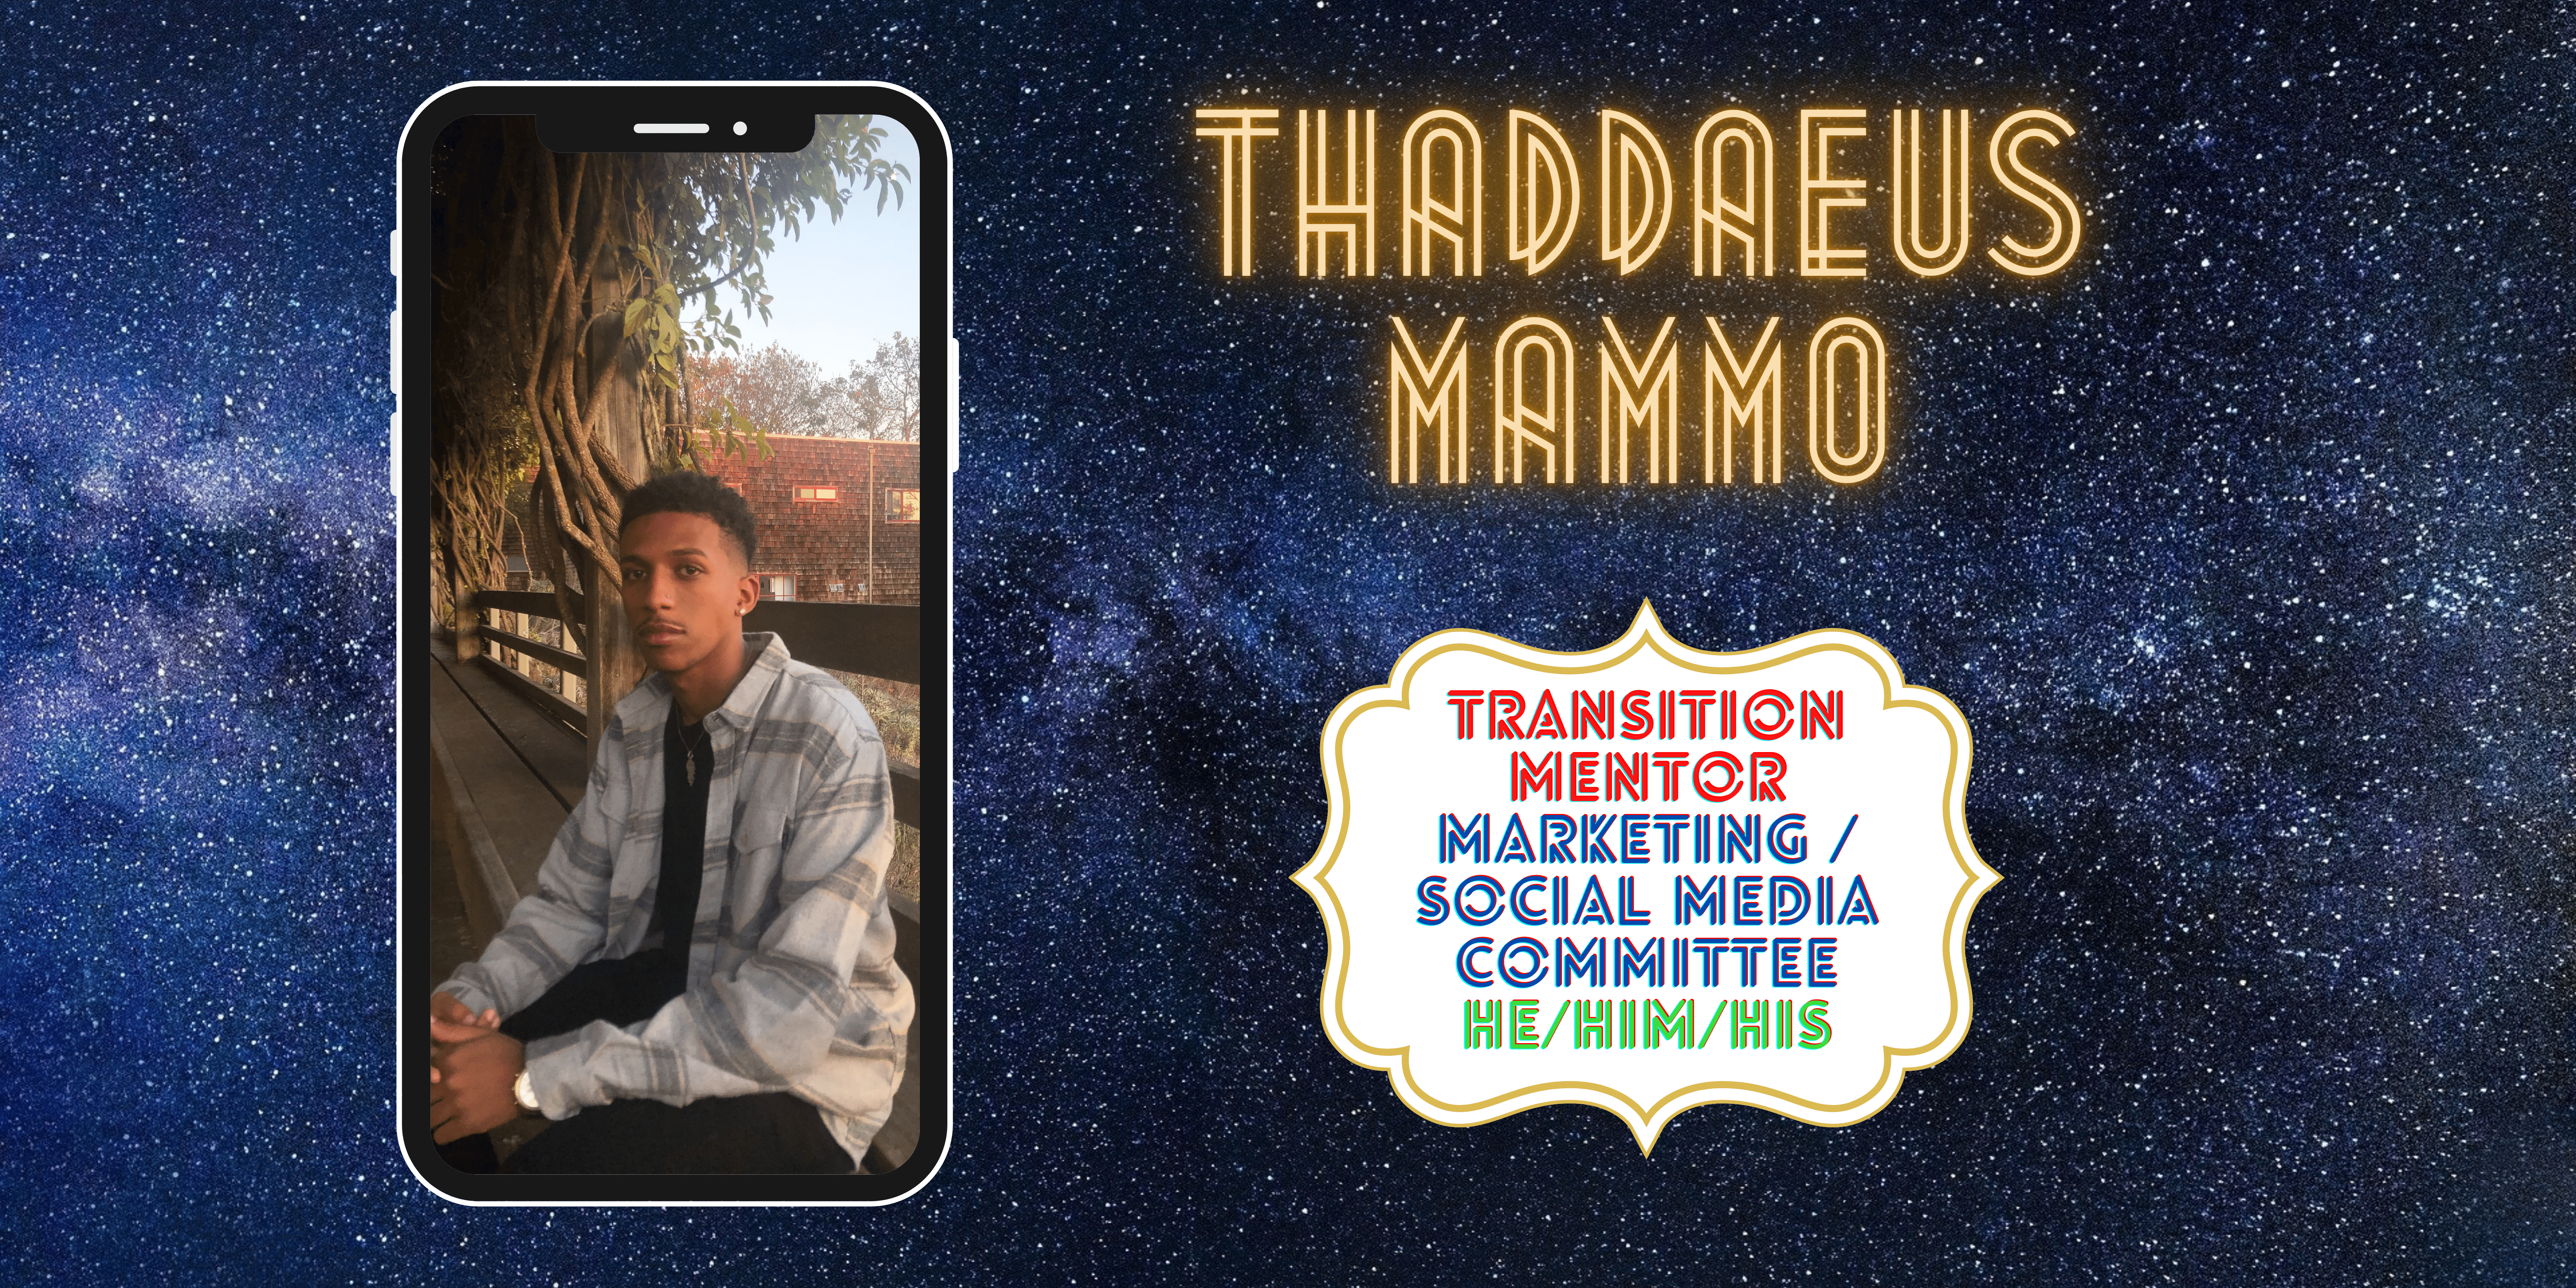 Transition Mentor: Thaddaeus Mammo, pronouns he/him, Marketing/Social Media Committee